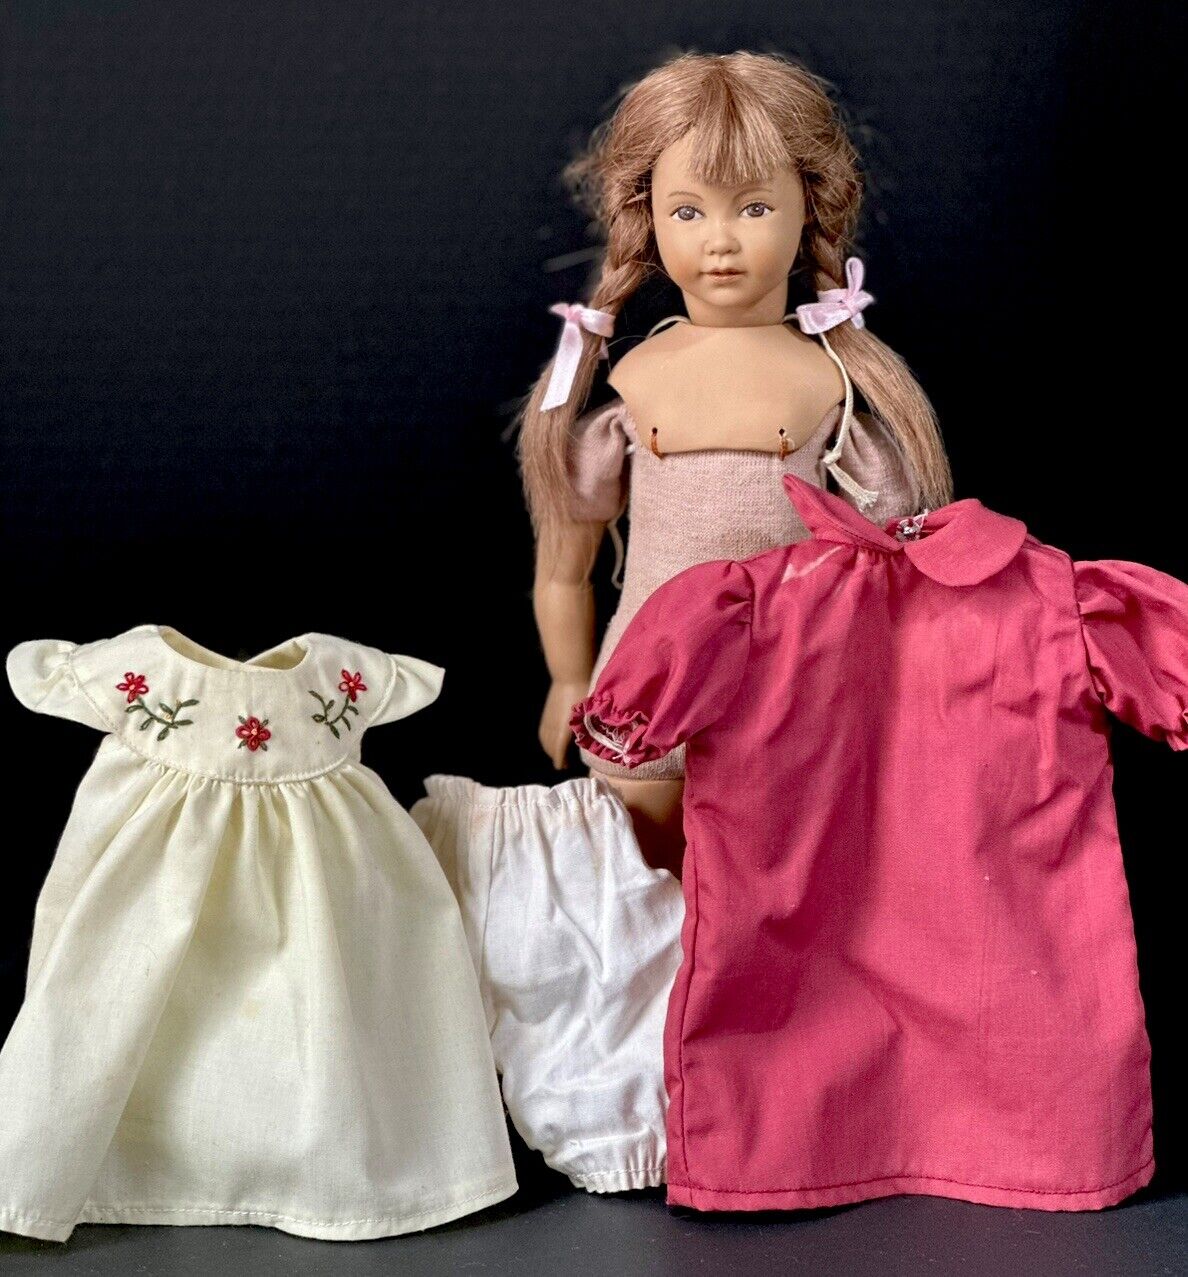 Collectible Swiss 12” Vinyl and Cloth Doll by Heidi Ott “Heidi”